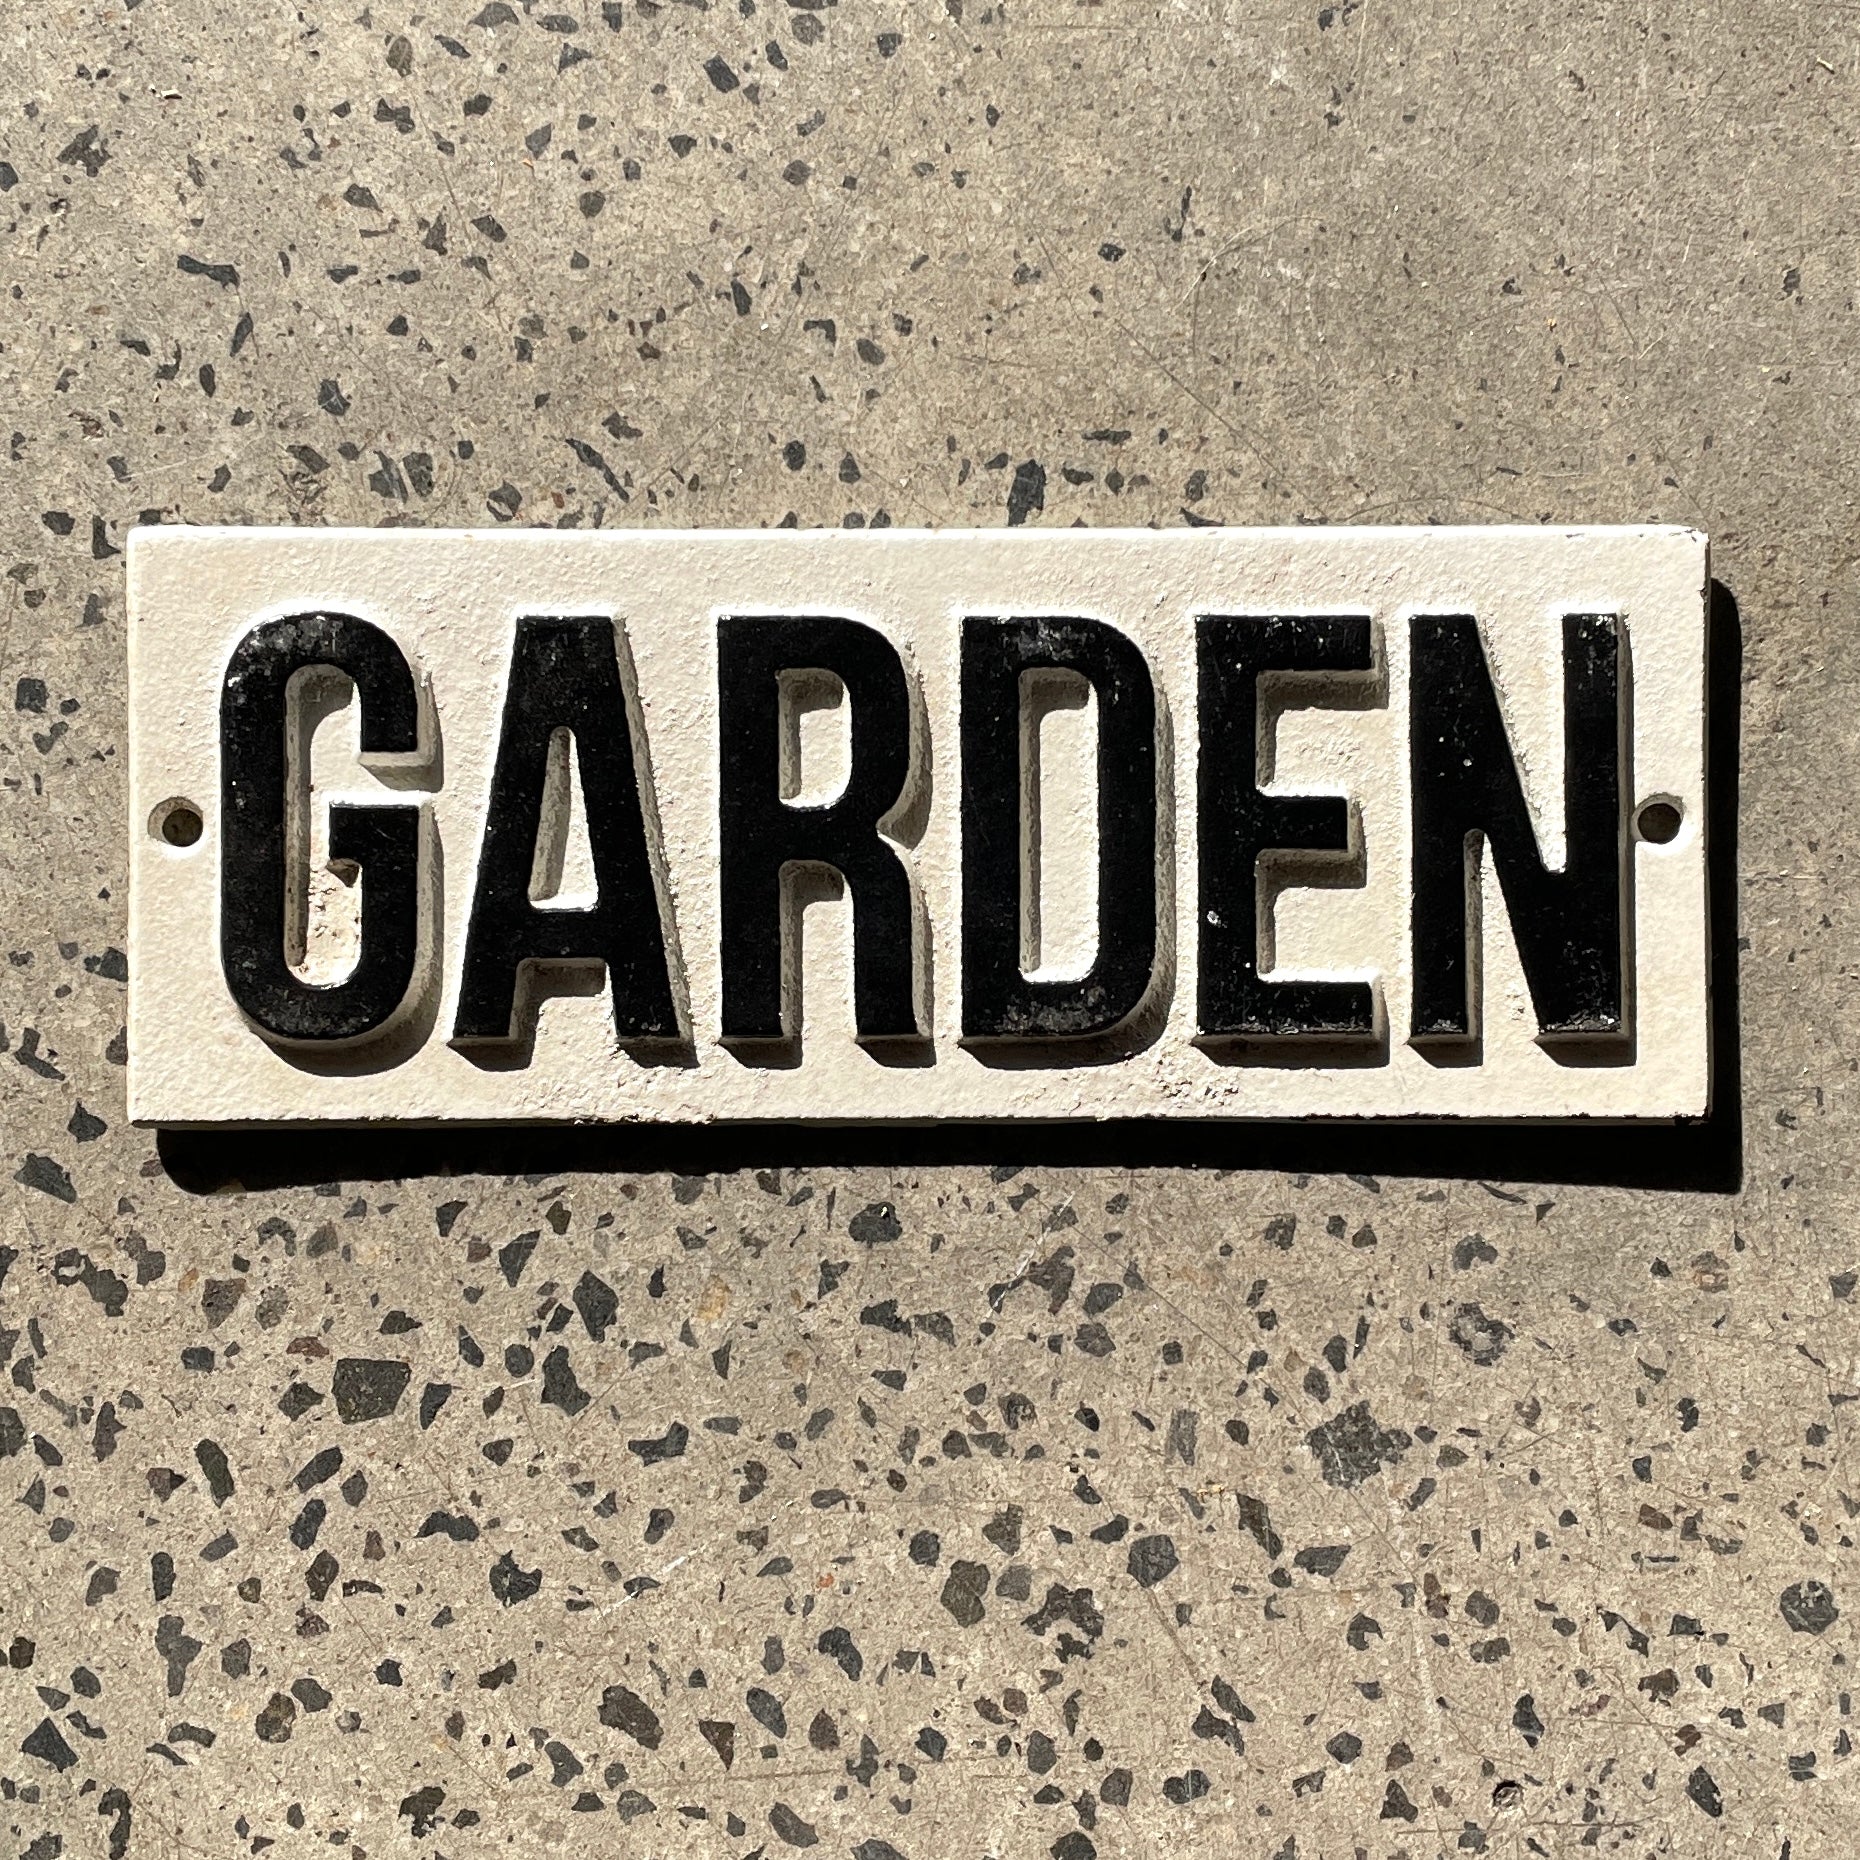 Rustic Cast Iron Garden sign